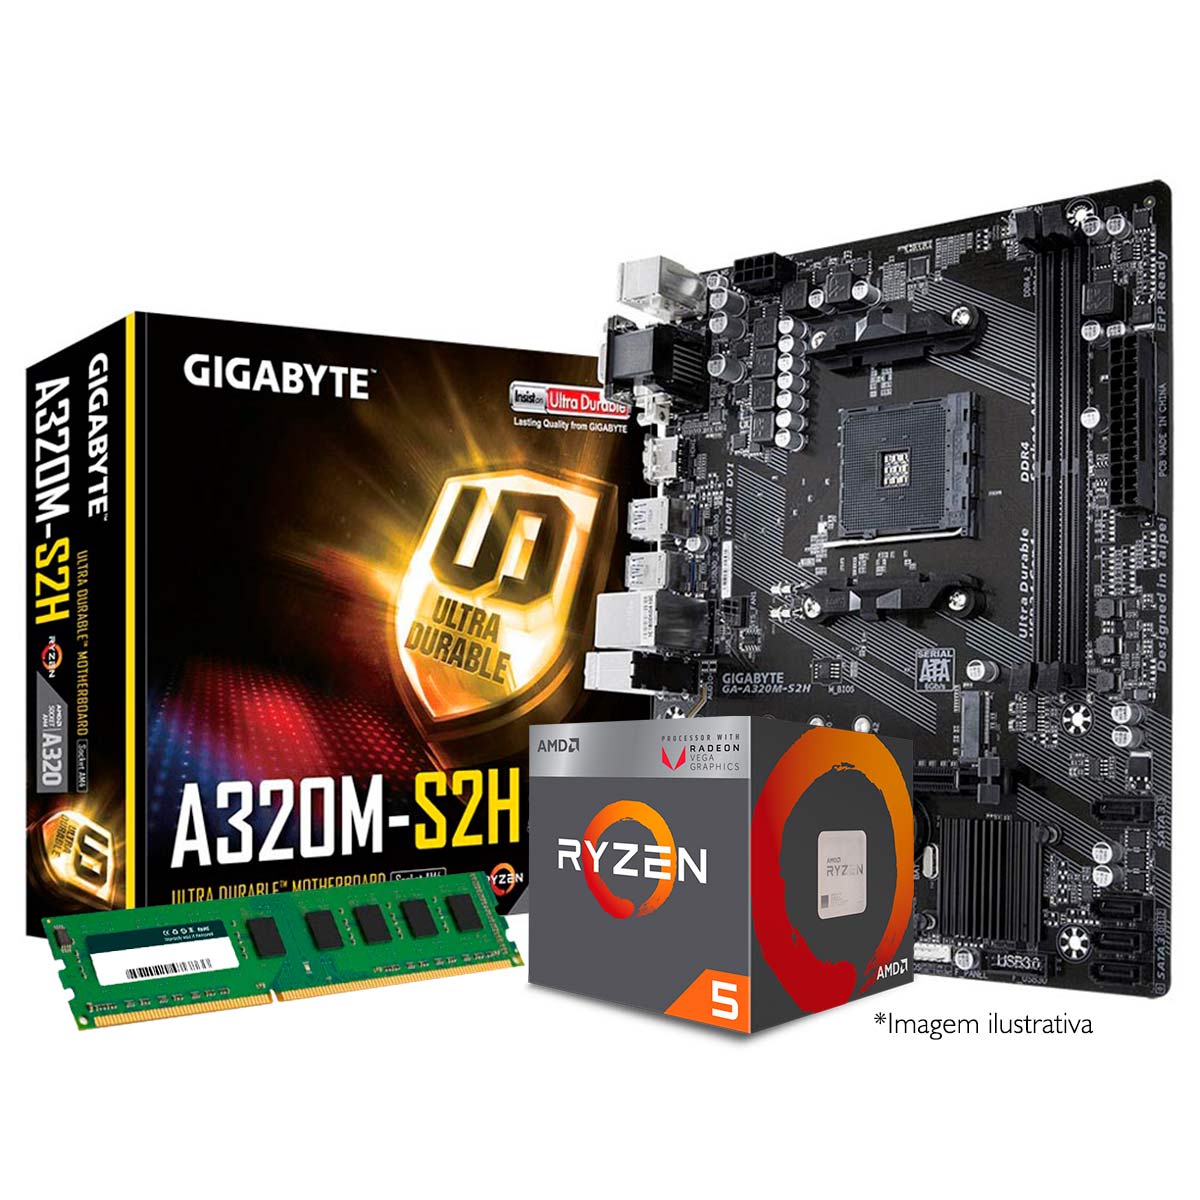 Kit AMD Ryzen™ 5 2400G + Gigabyte GA-A320M-S2H + Memória 8GB DDR4